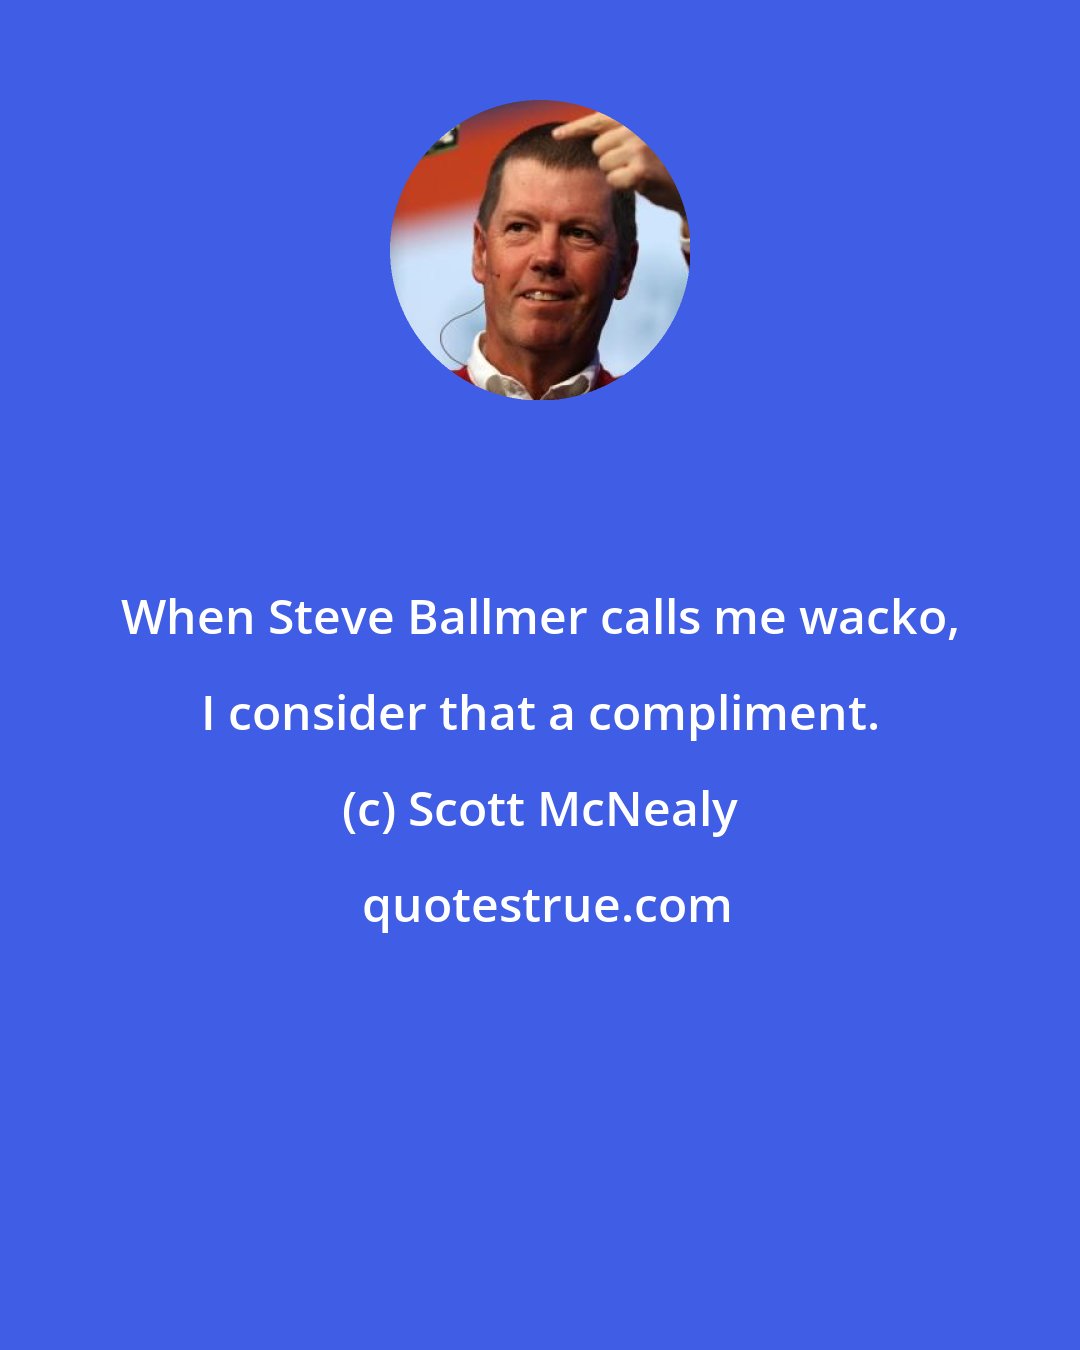 Scott McNealy: When Steve Ballmer calls me wacko, I consider that a compliment.